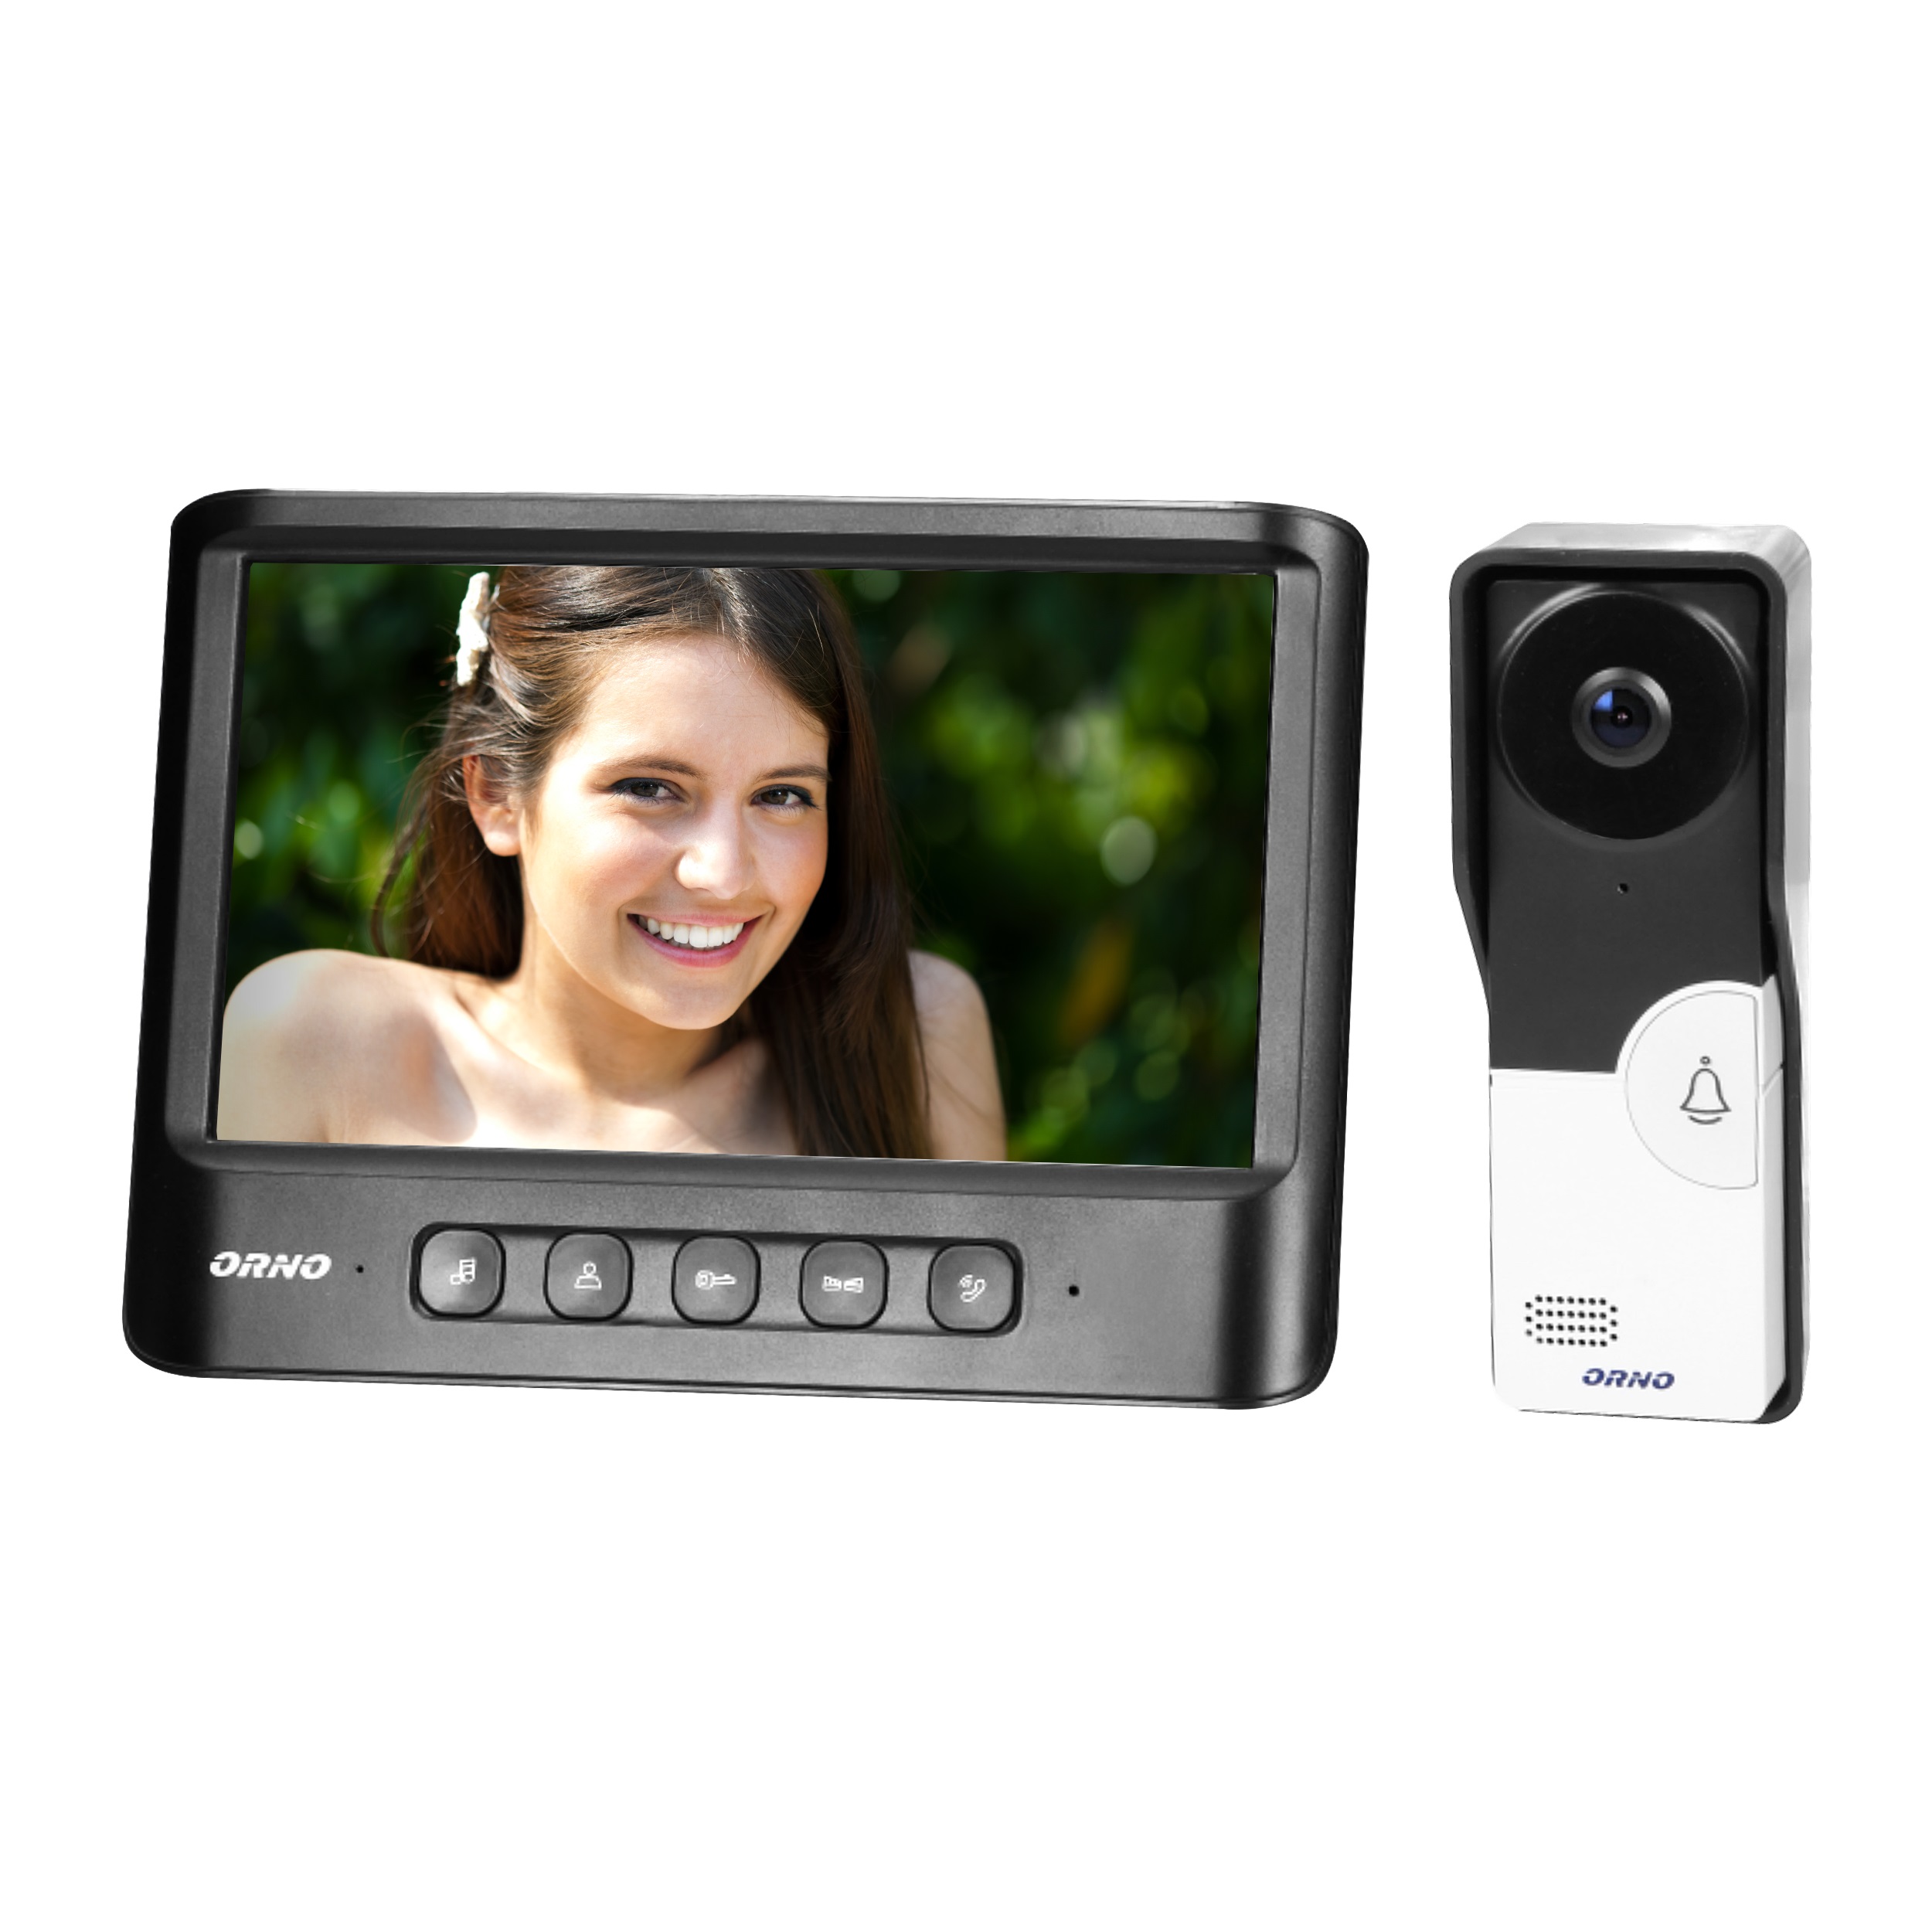 Videointerfon pentru o familie IMAGO ORNO OR-VID-MC-1059/B, color, monitor ultra-plat LCD 7", control automat al portilor, 16 sonerii, infrarosu, negru/alb